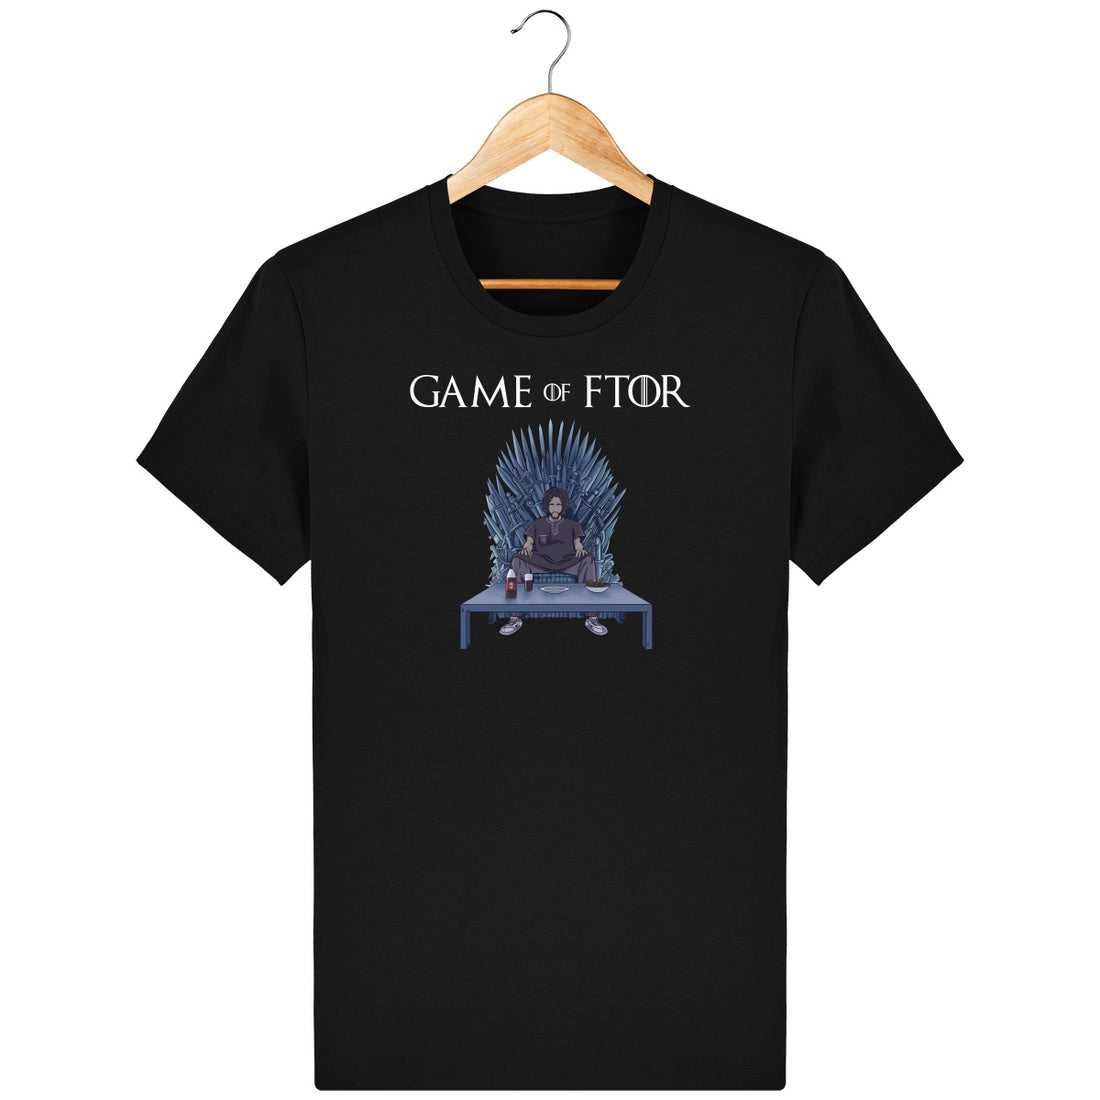 tshirt game of ftor